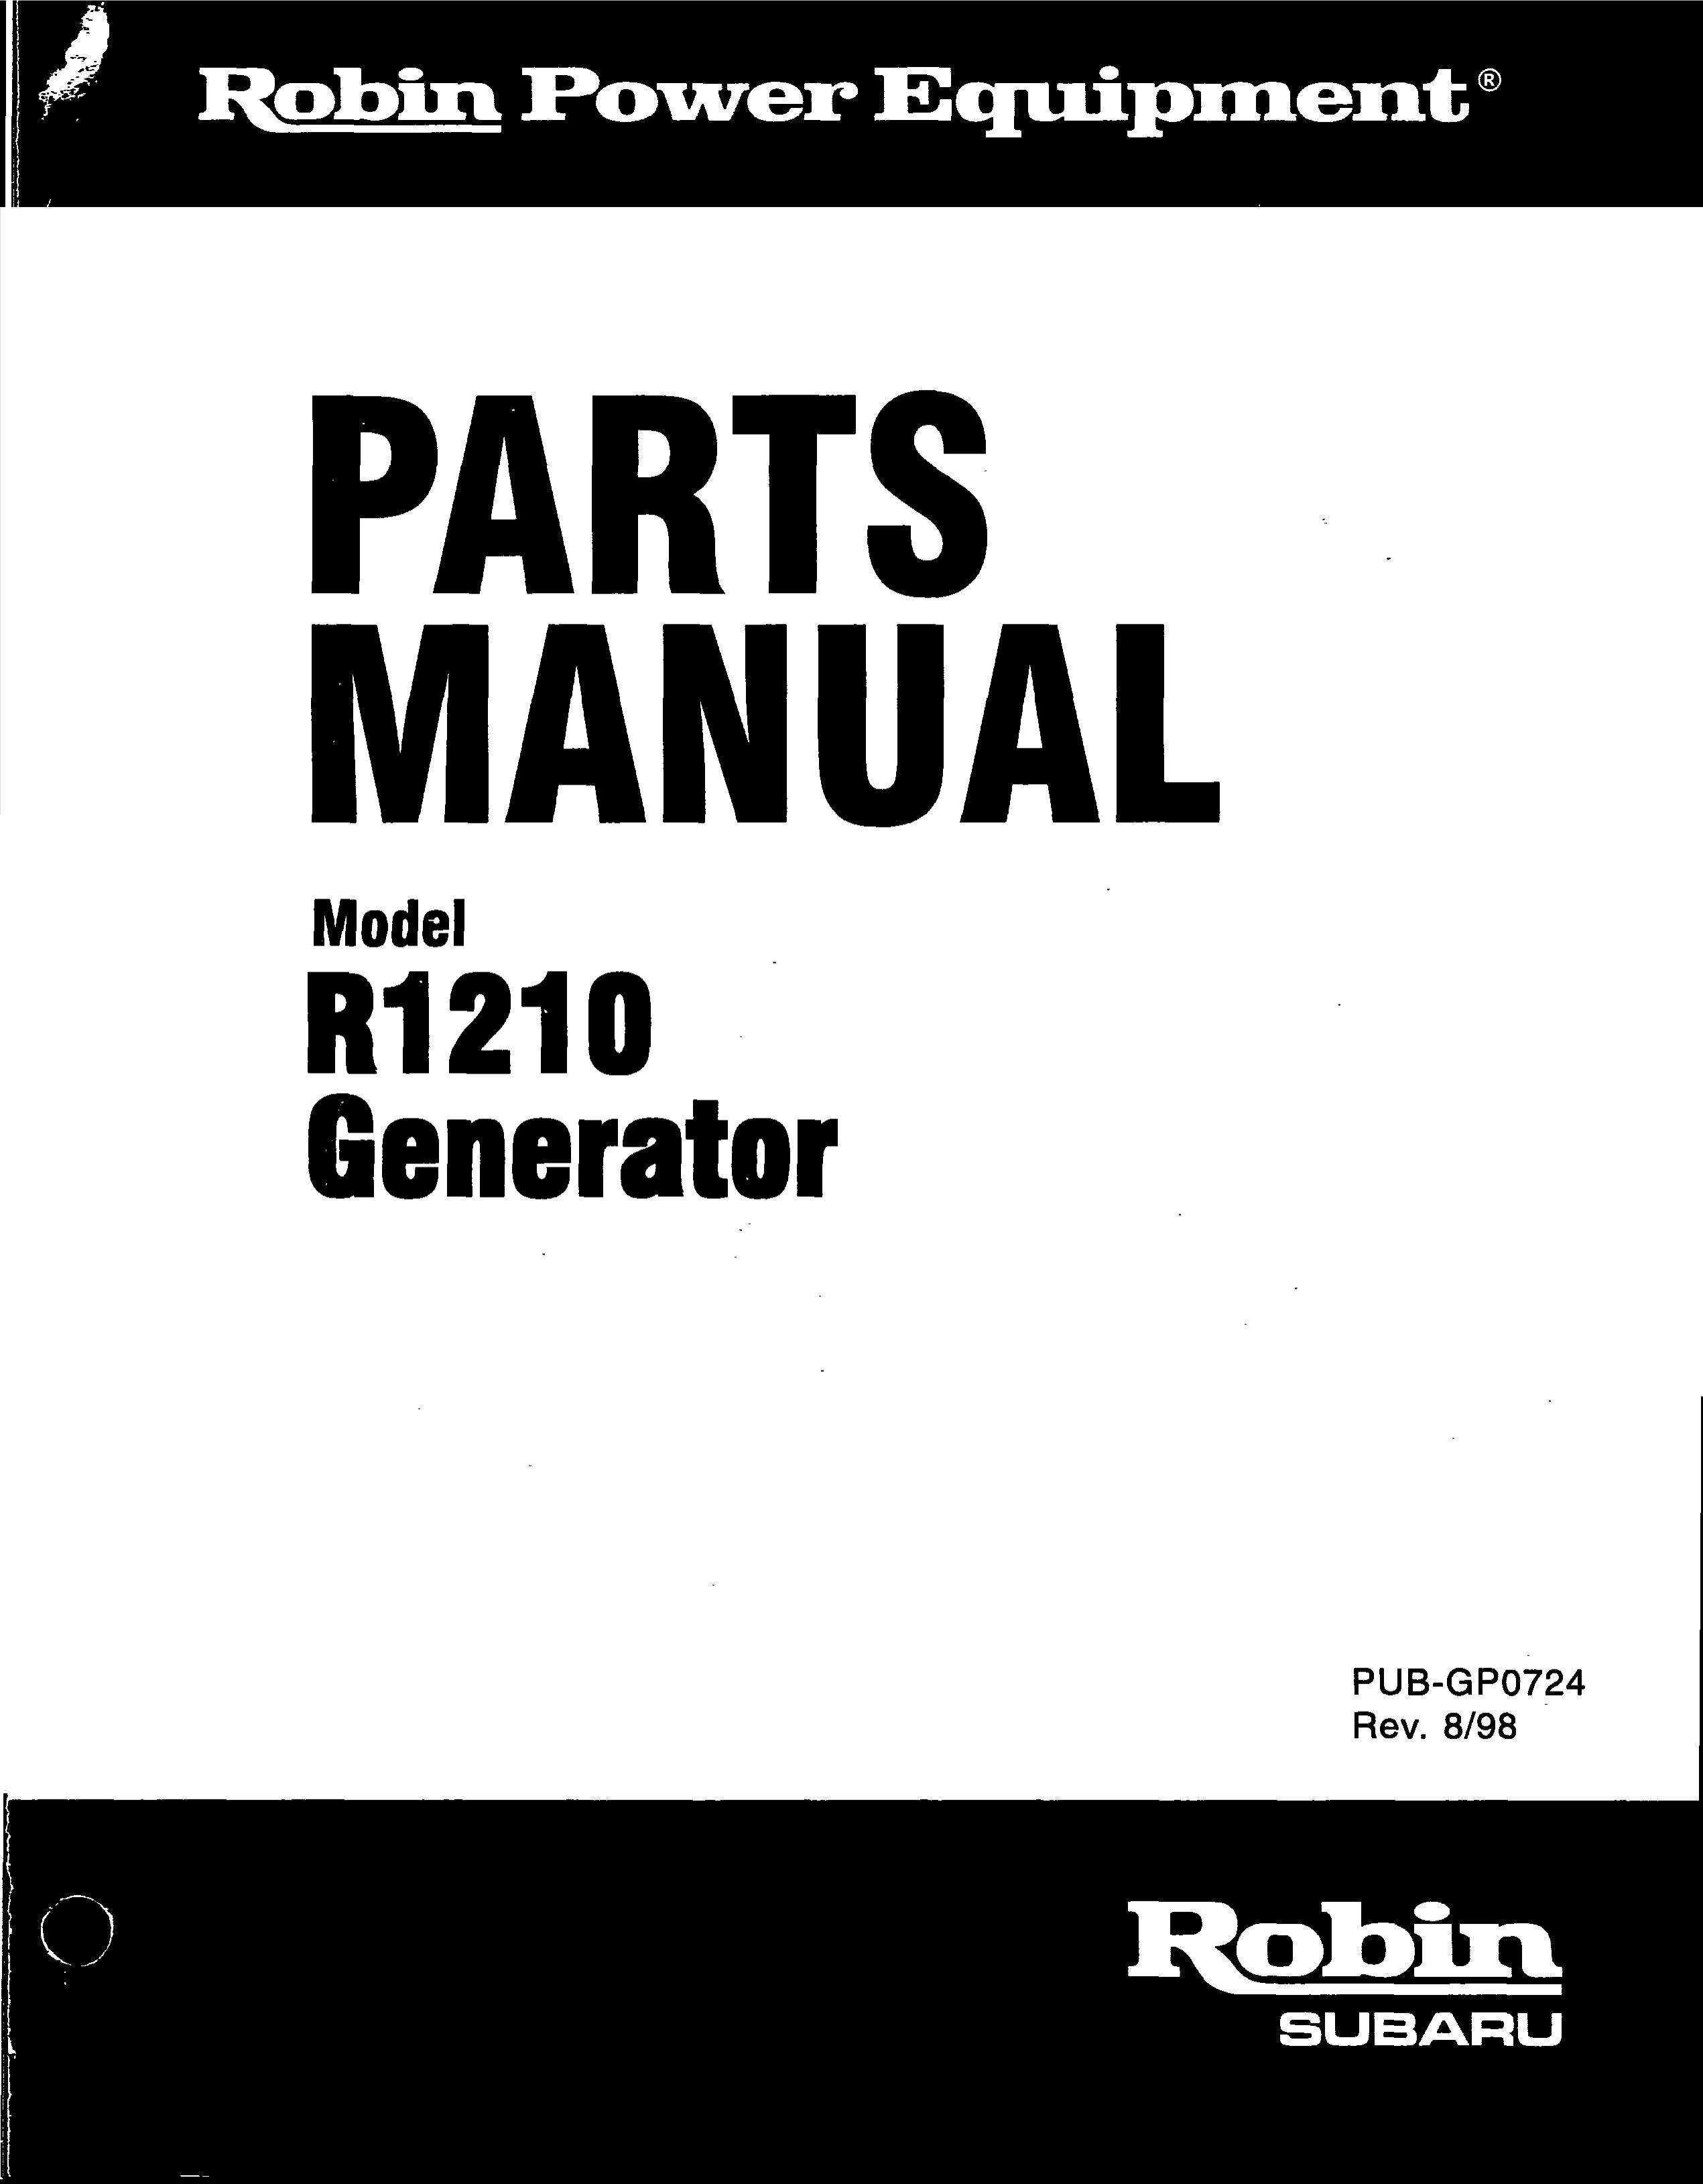 Subaru Robin Power Products R1210 Portable Generator User Manual